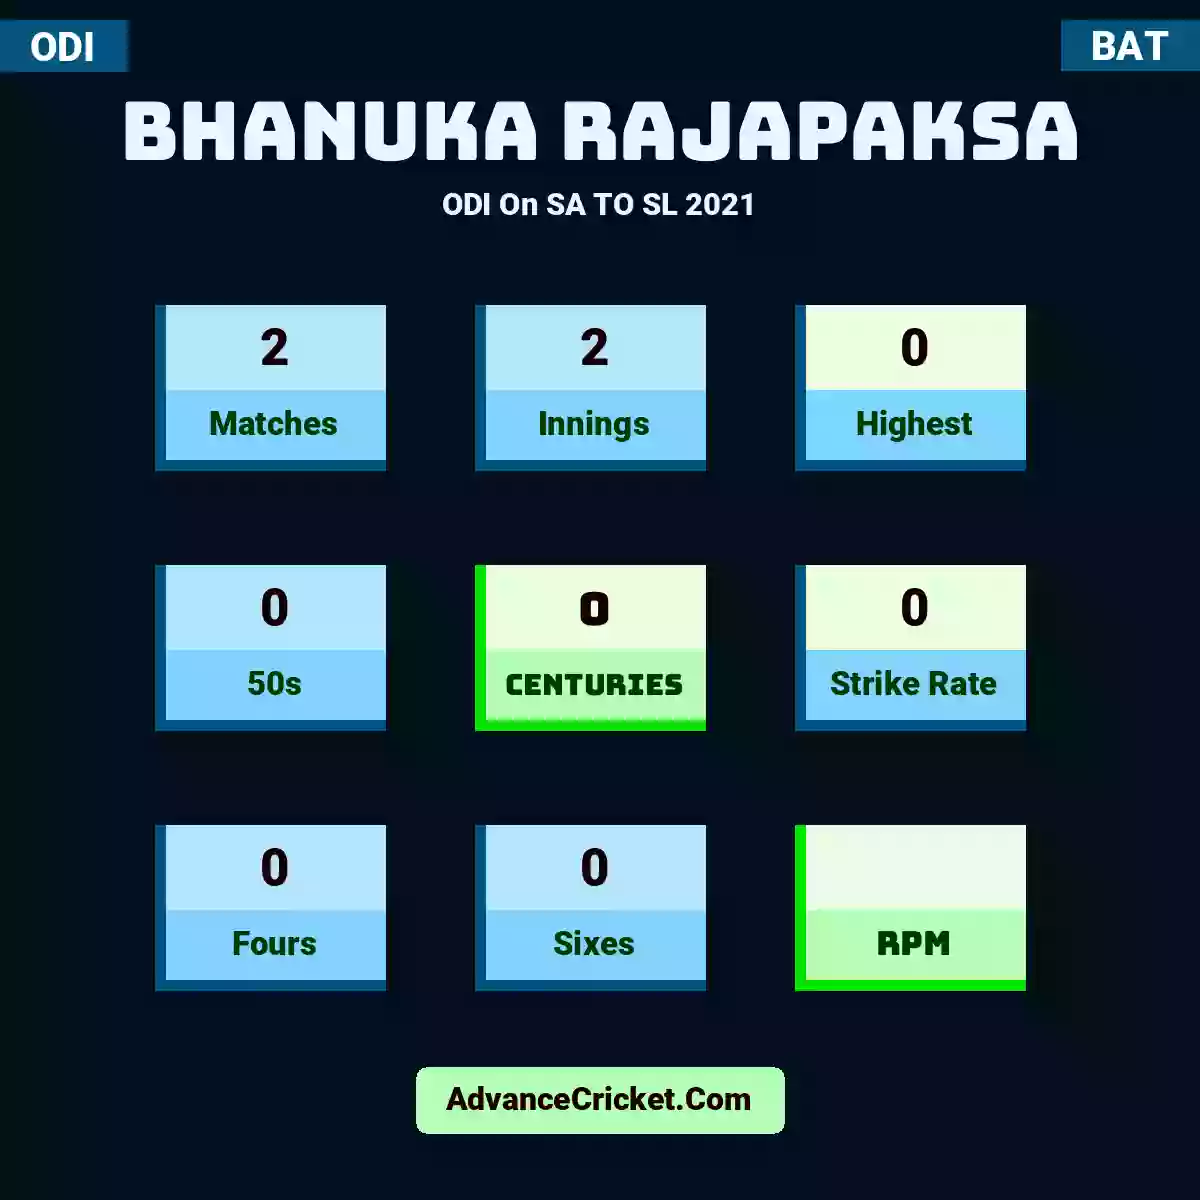 Bhanuka Rajapaksa ODI  On SA TO SL 2021, Bhanuka Rajapaksa played 2 matches, scored 0 runs as highest, 0 half-centuries, and 0 centuries, with a strike rate of 0. B.Rajapaksa hit 0 fours and 0 sixes.